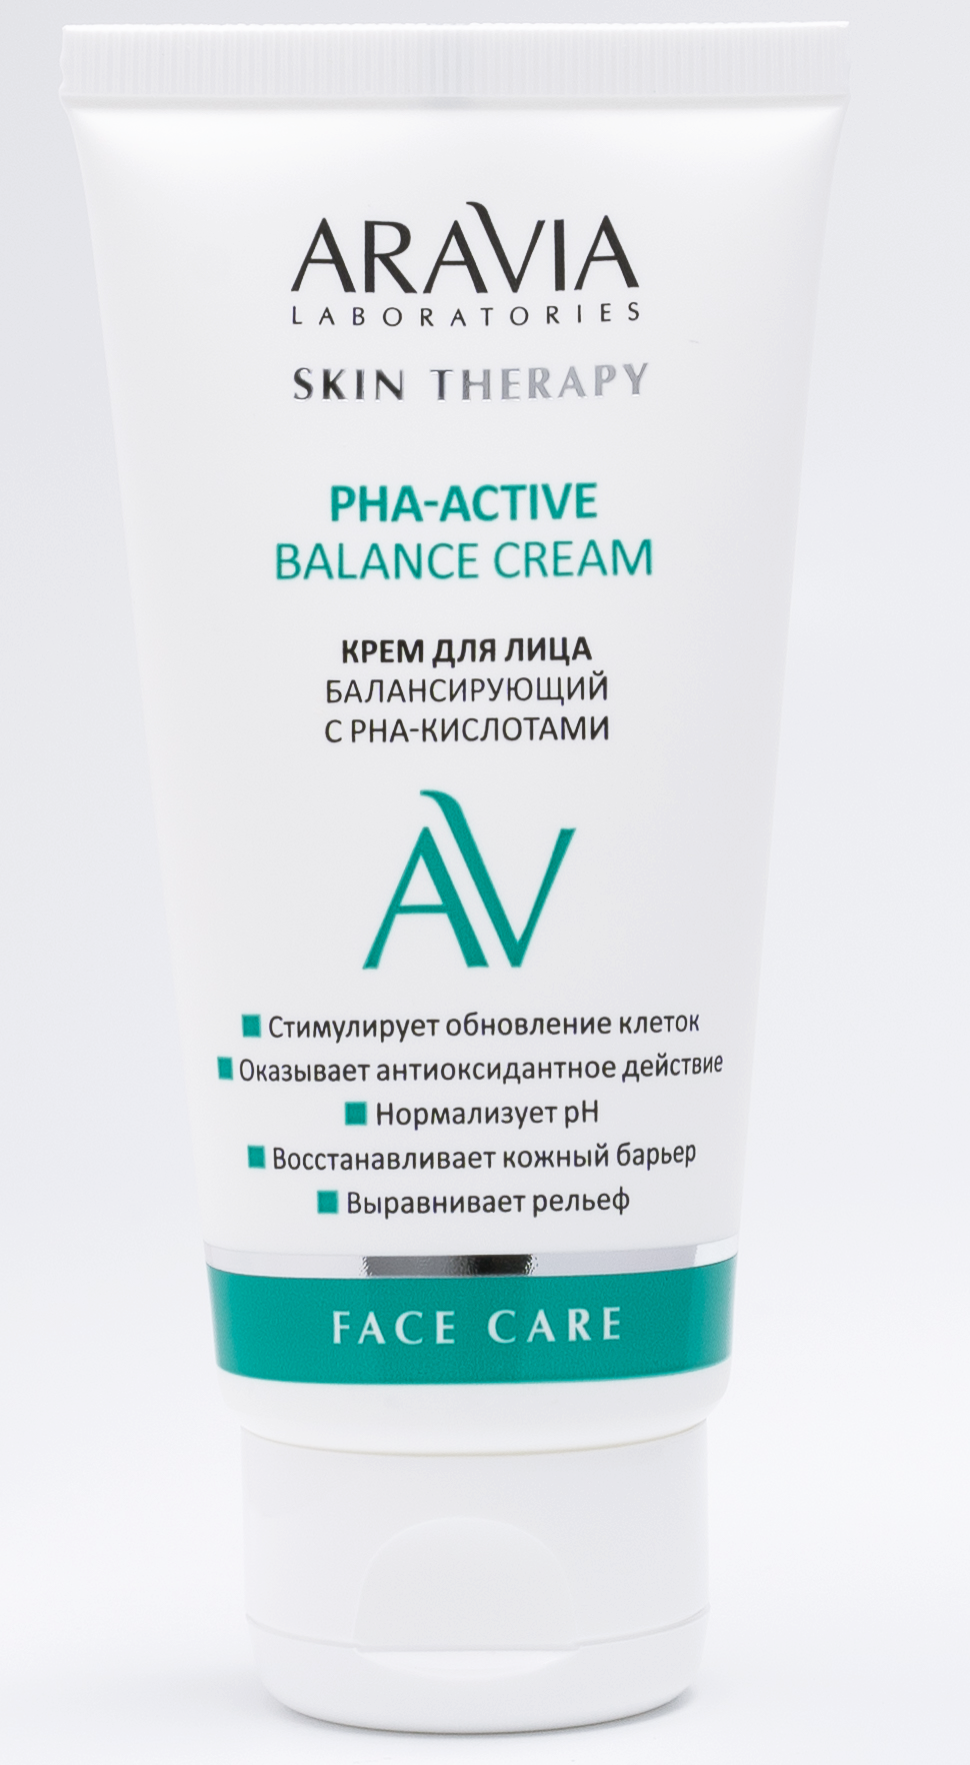 Крем для лица балансирующий с pha-кислотами Pha-active balance cream, Aravia laboratories
&nbsp;